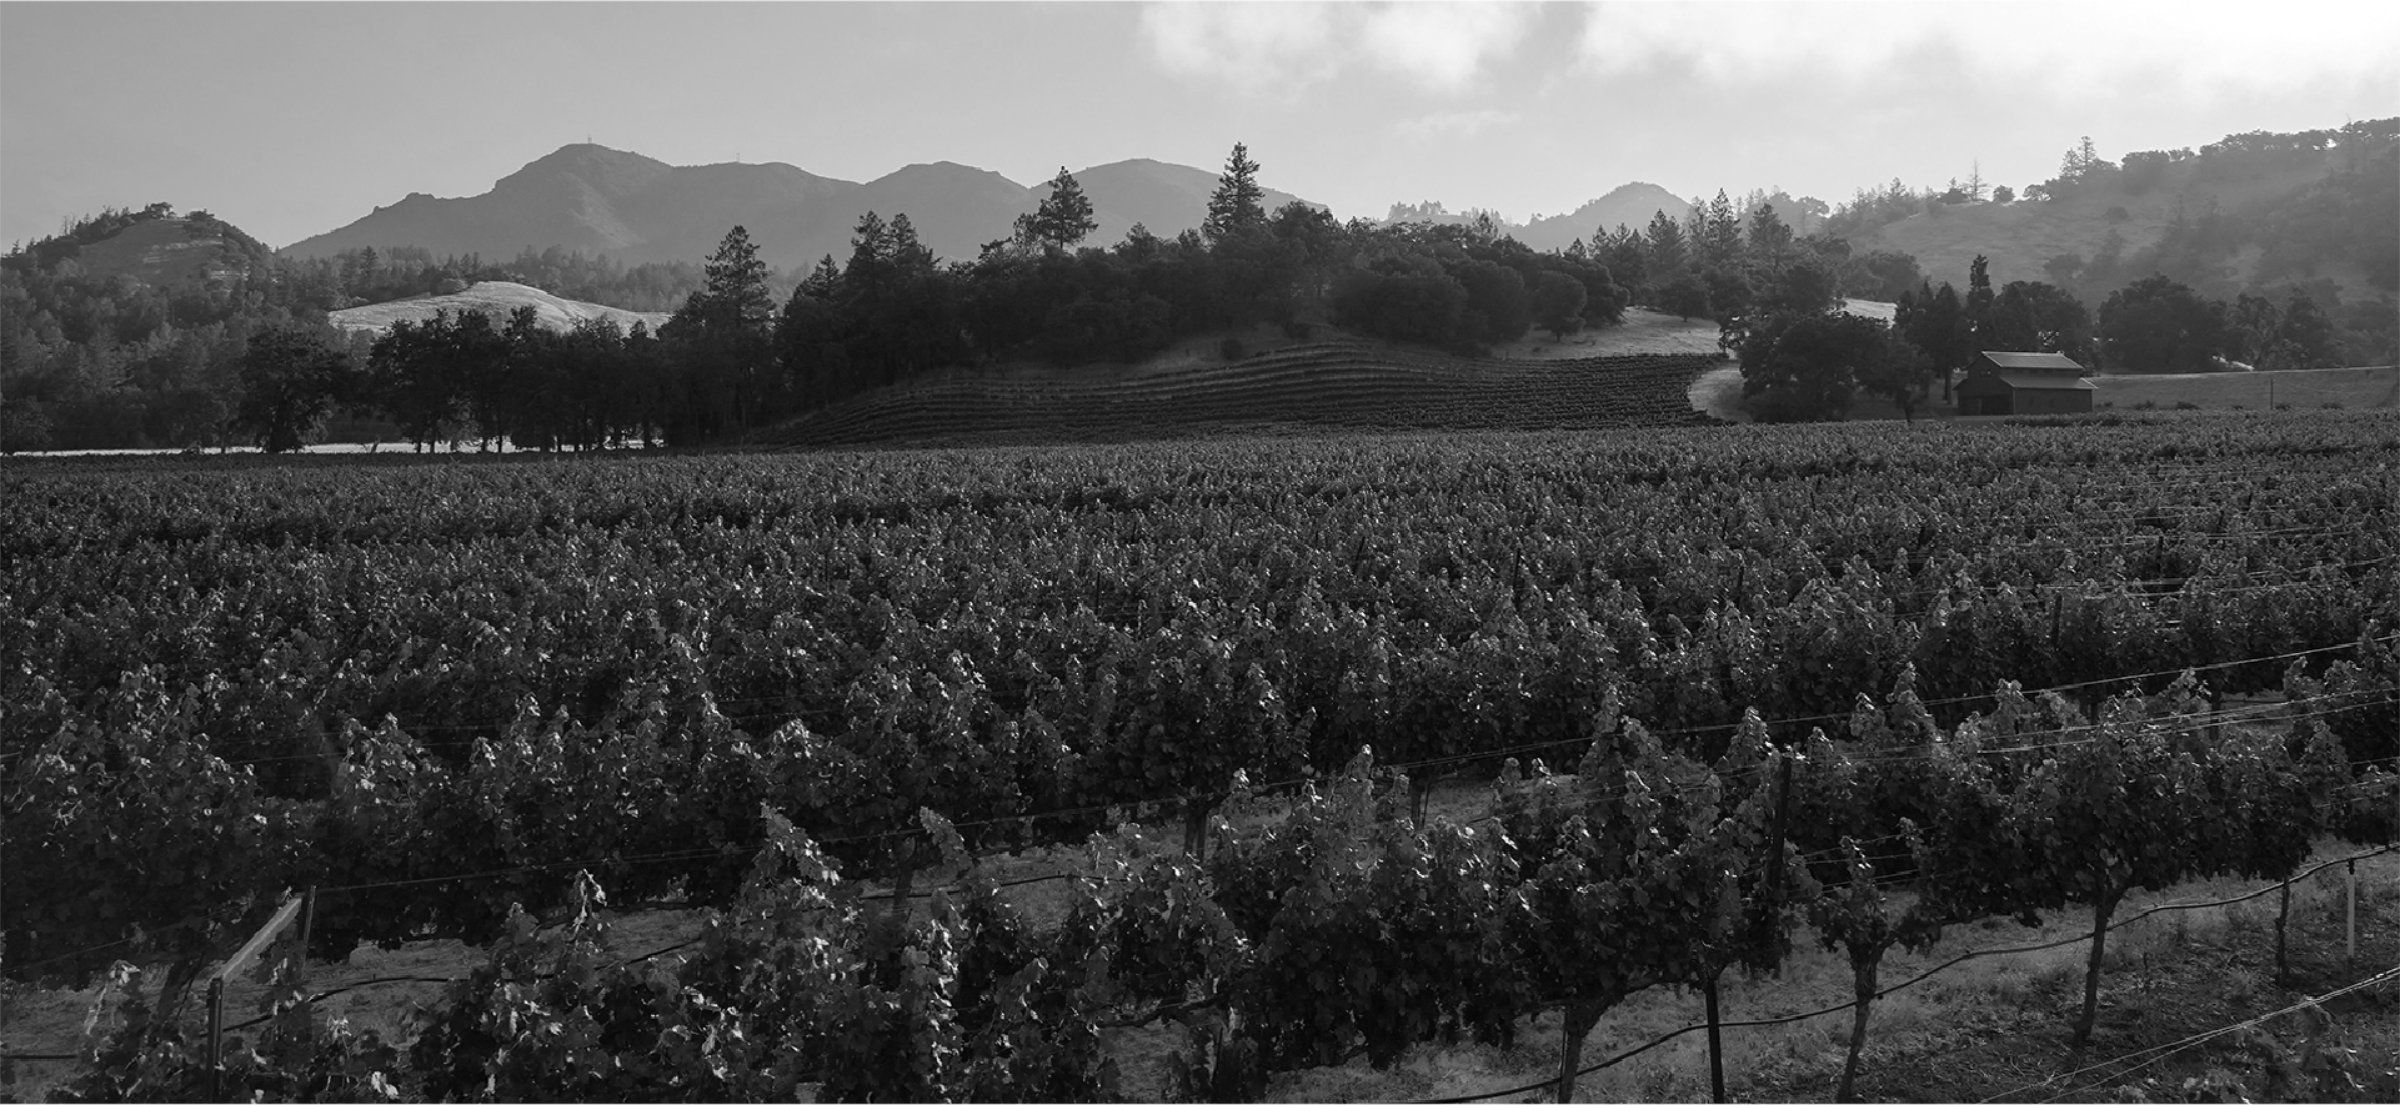 Black and white photo of vineyards